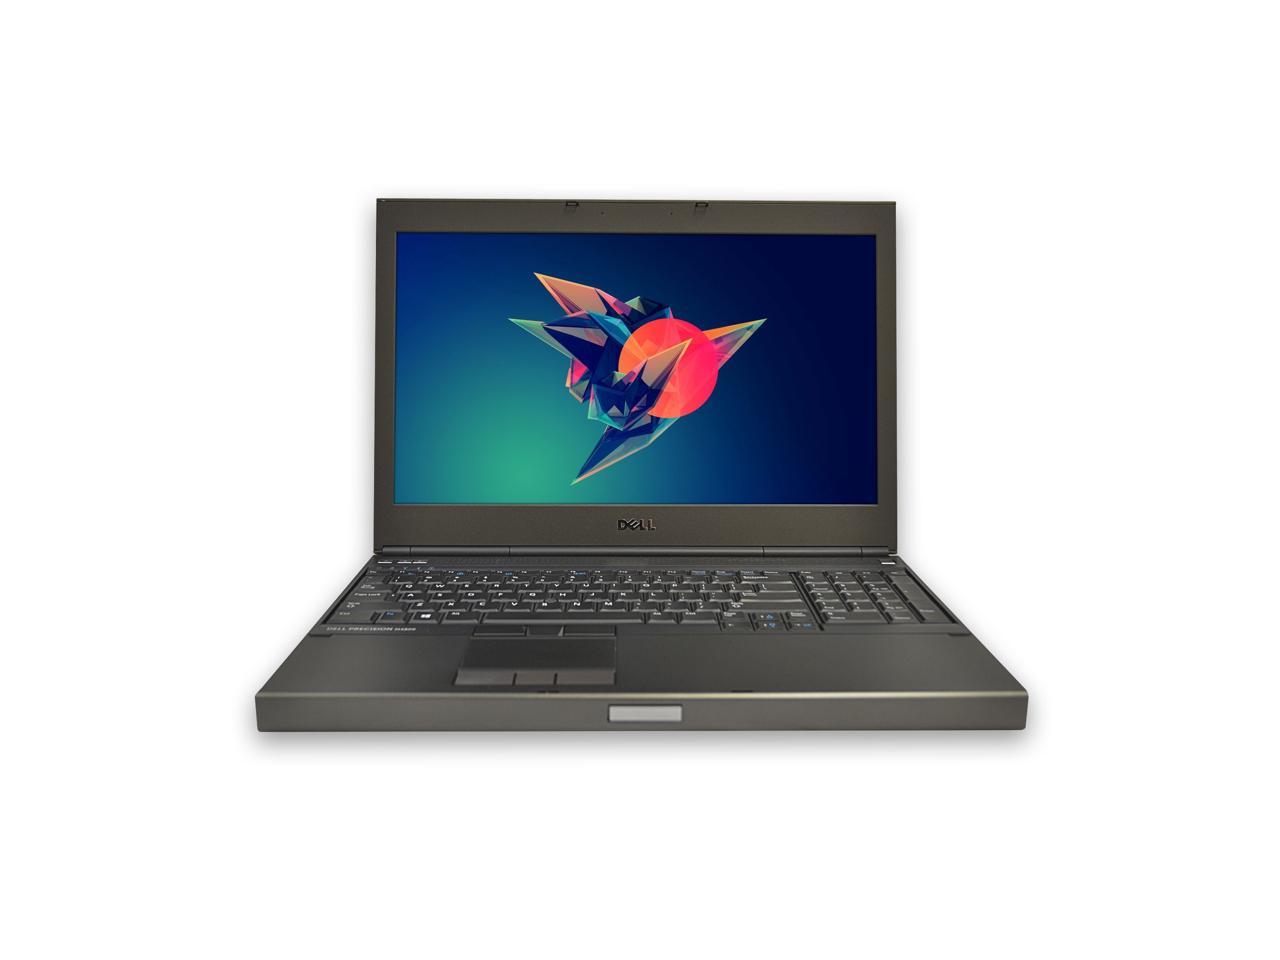 Dell Precision M4800 Laptop Computer, 2.80 GHz Intel i7 Quad Core Gen 4, 8GB DDR3 RAM, 256GB SSD Hard Drive, Windows 10 Professional 64 Bit, 15" Screen (Grade B)